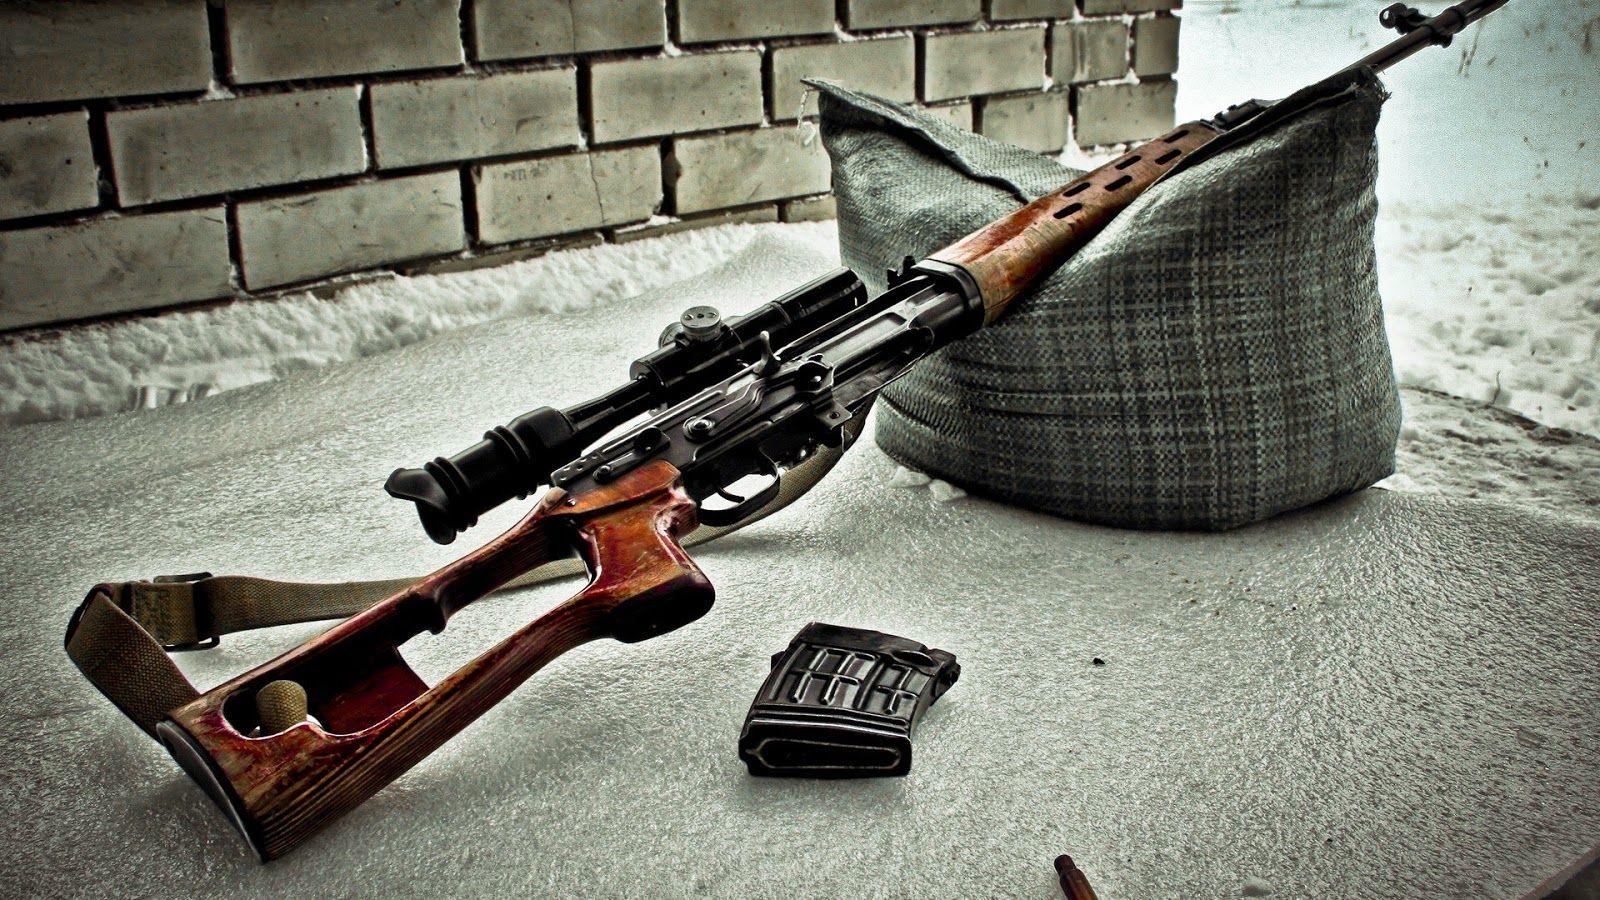 Sniper Rifles HD Wallpaper By PCbots PCbots Labs (Blog)